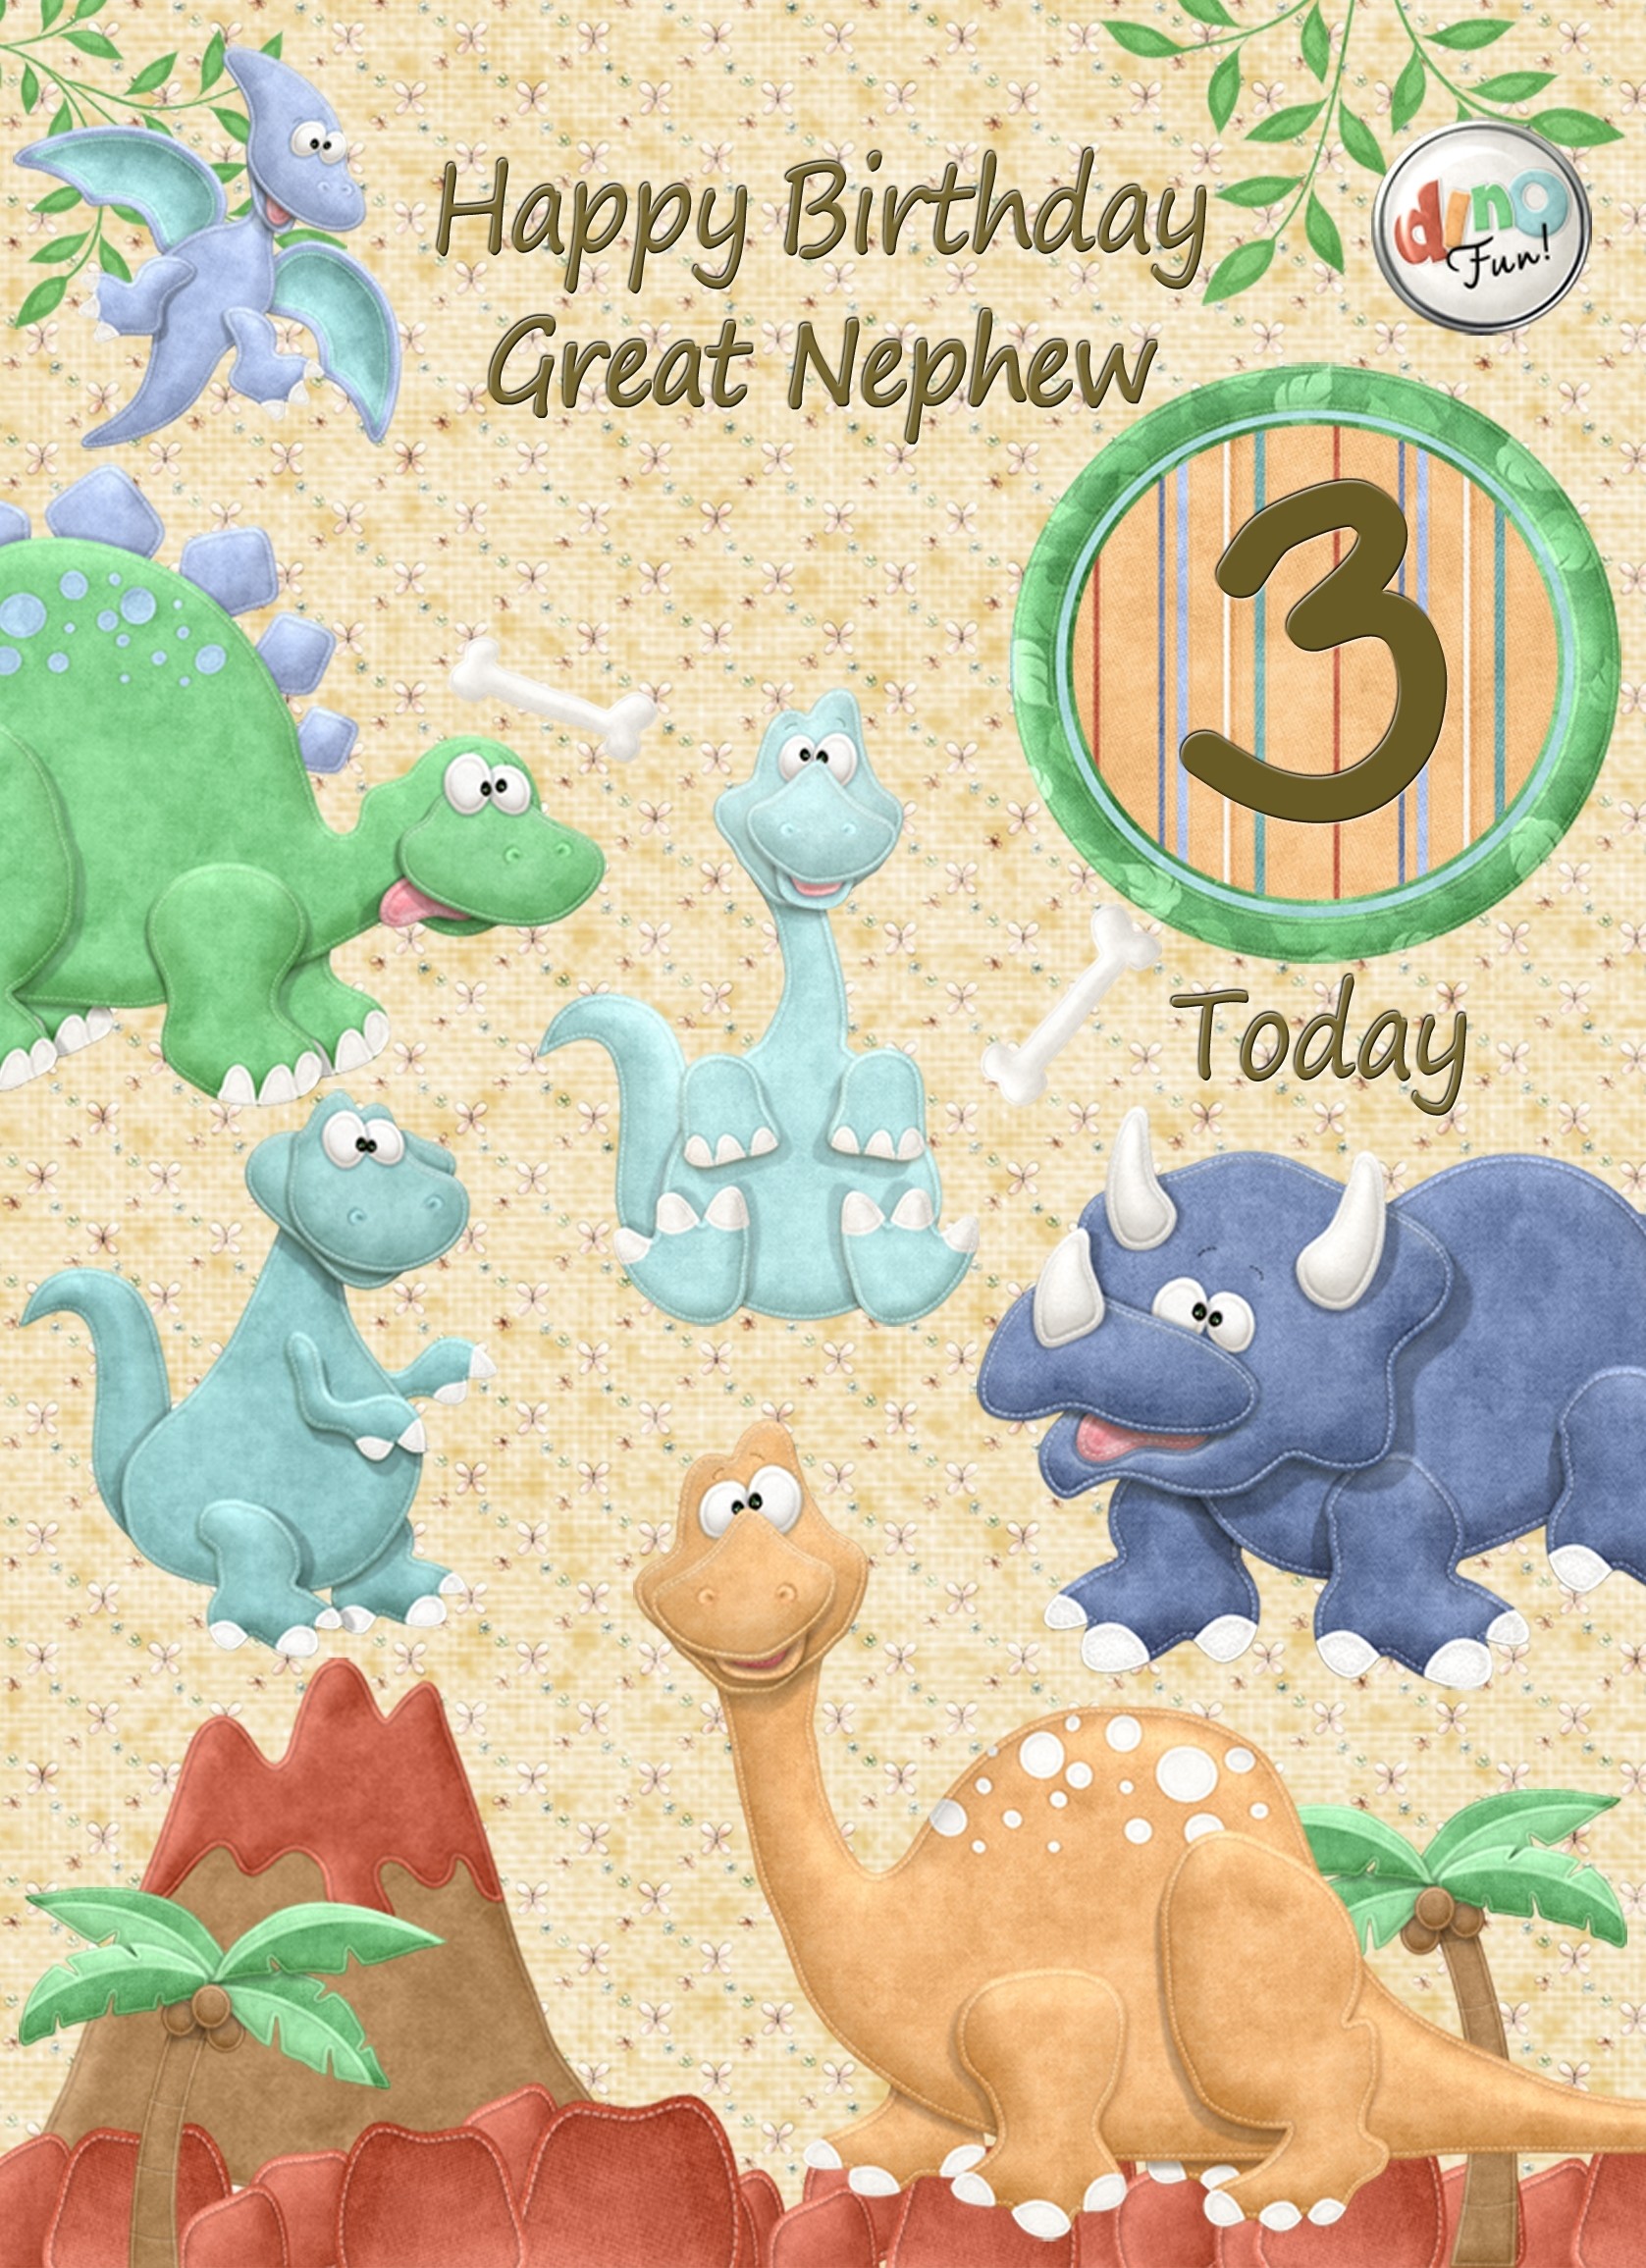 Kids 3rd Birthday Dinosaur Cartoon Card for Great Nephew